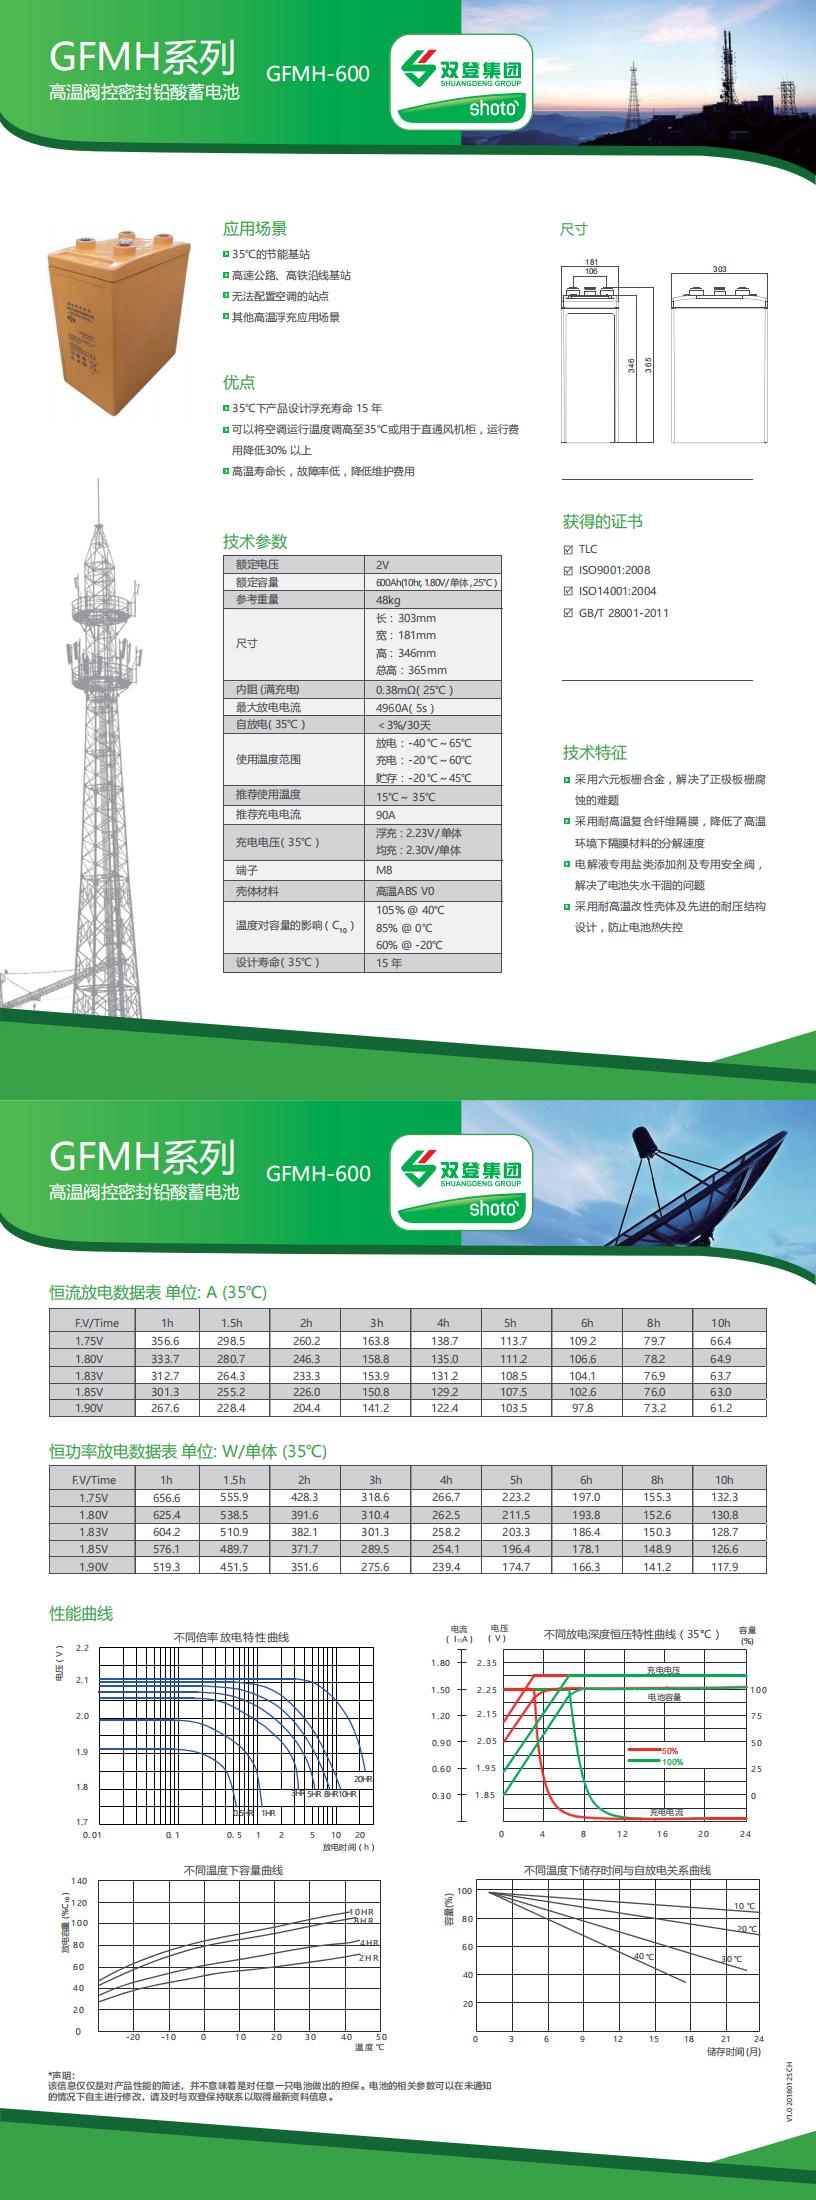 GFMH-600中文_00.jpg